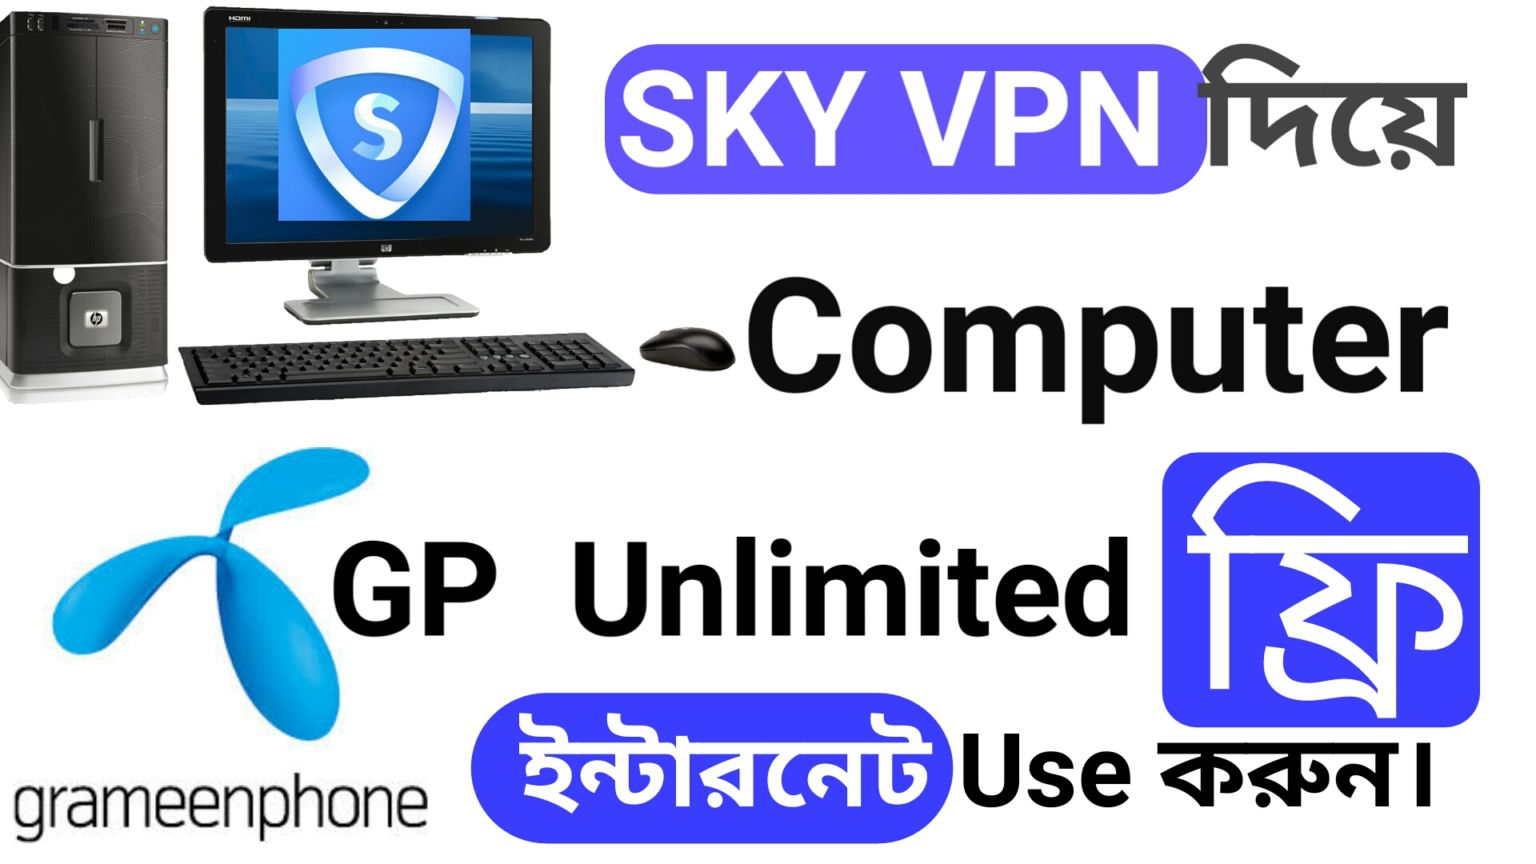 Skyvpn Computer তে GP SIM দিয়ে Unlimited Free Internet Use করুন And Skyvpn limit Hack